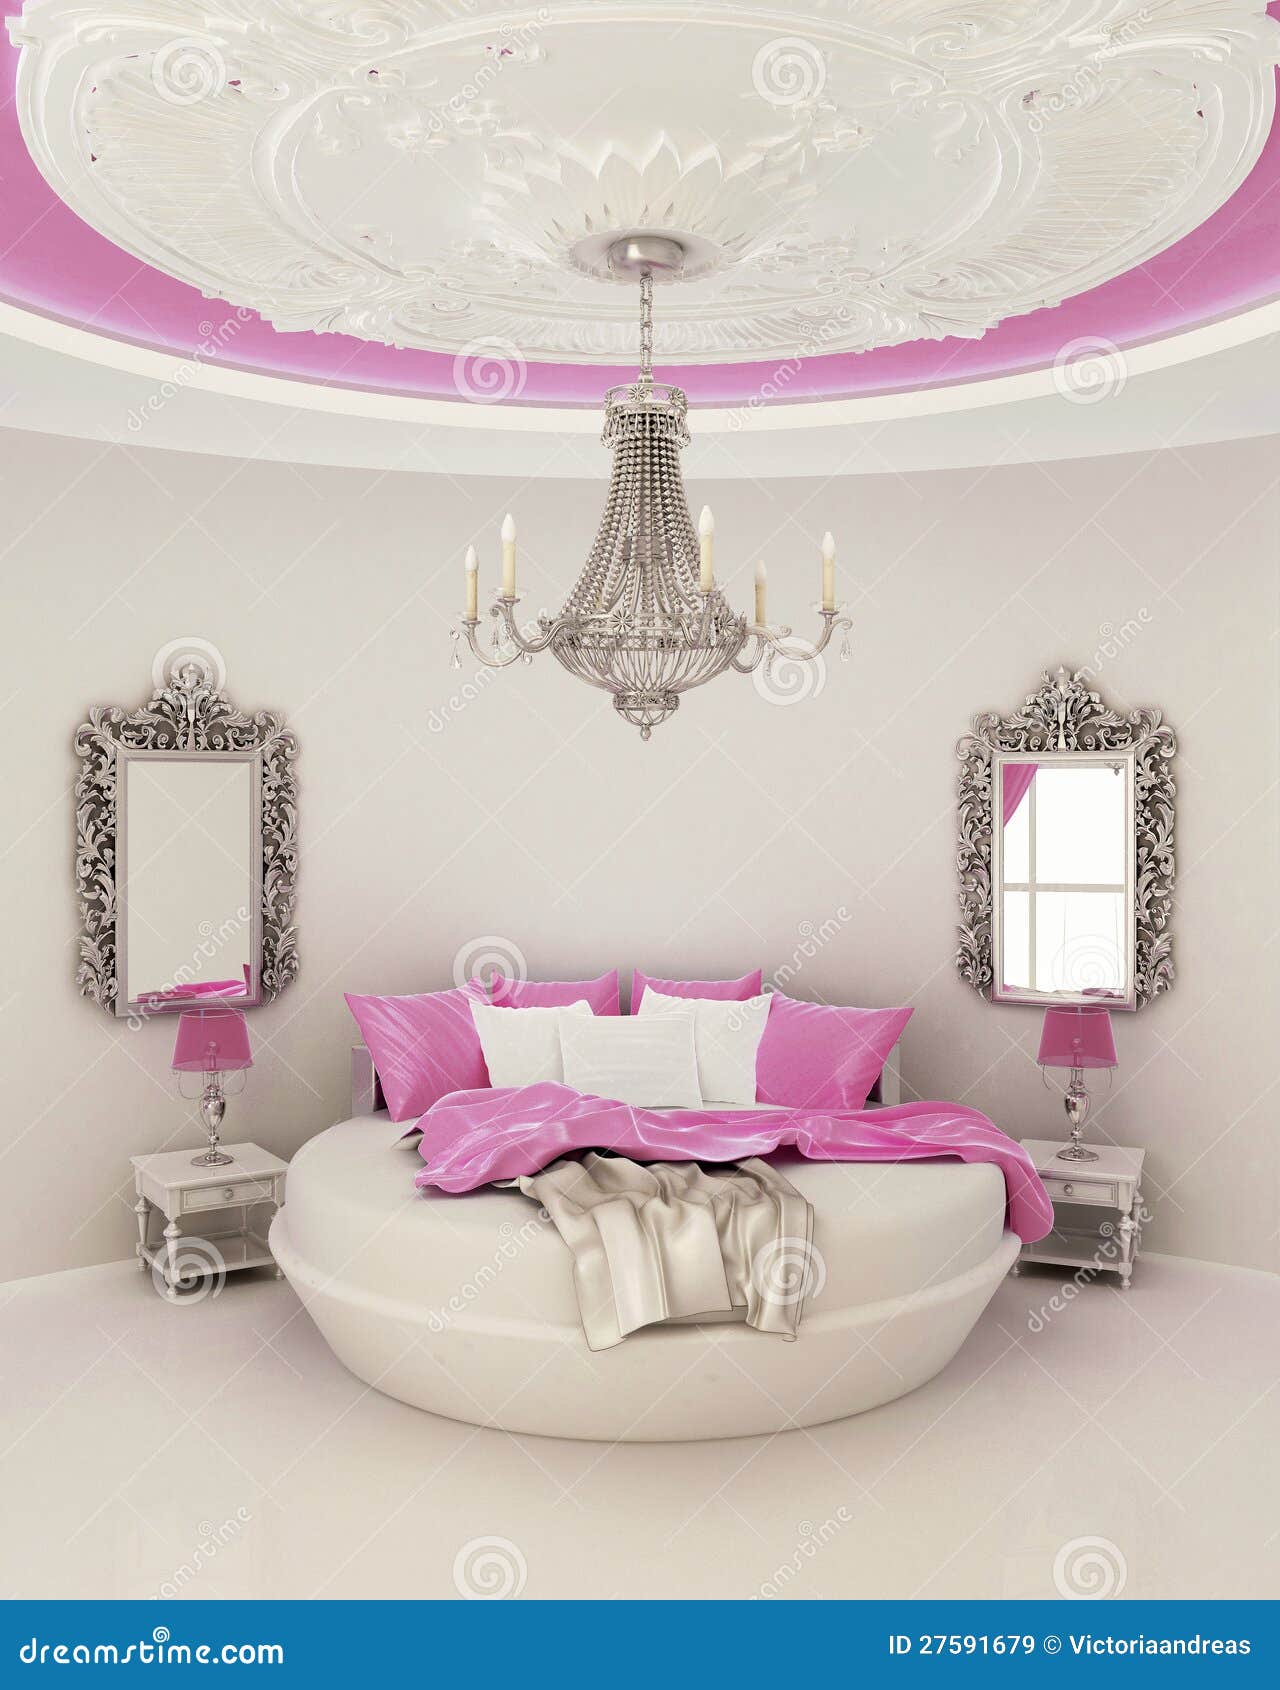 Ceiling Decor in Modern Bedroom Stock Illustration - Illustration ...